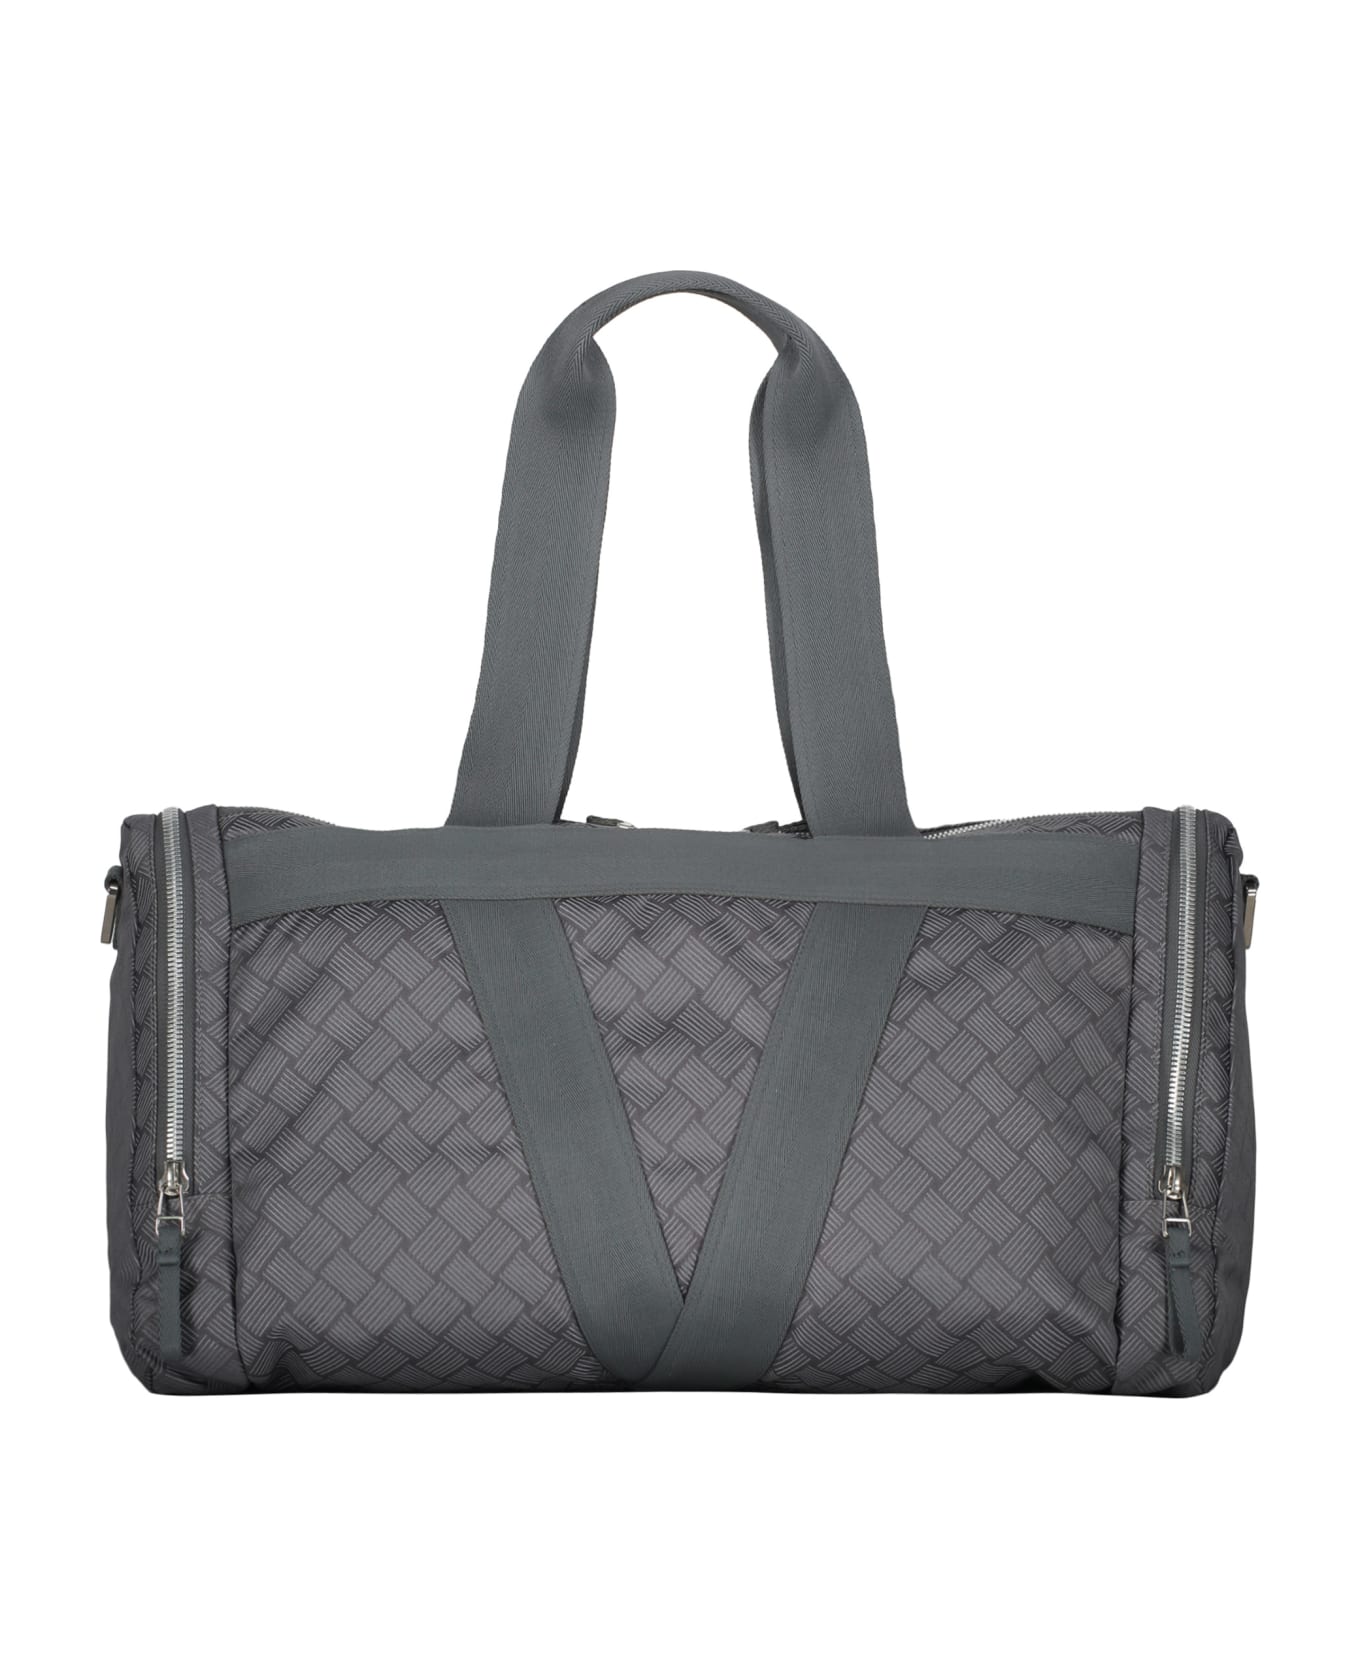 Bottega Veneta Travel Bag - grey